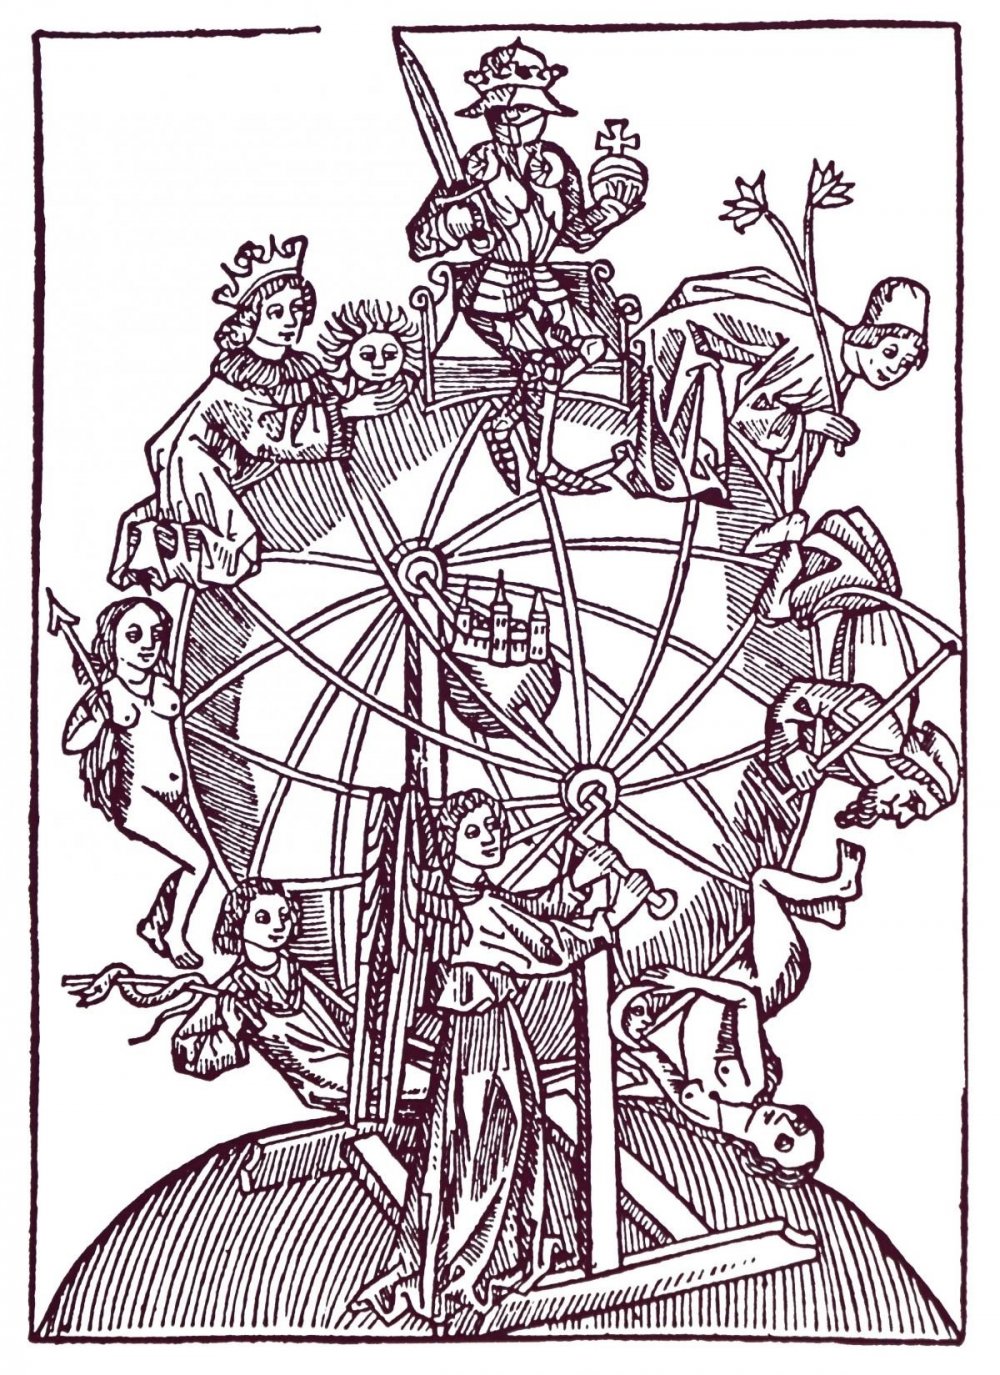 Wheel of Fortune («колесо фортуны»)